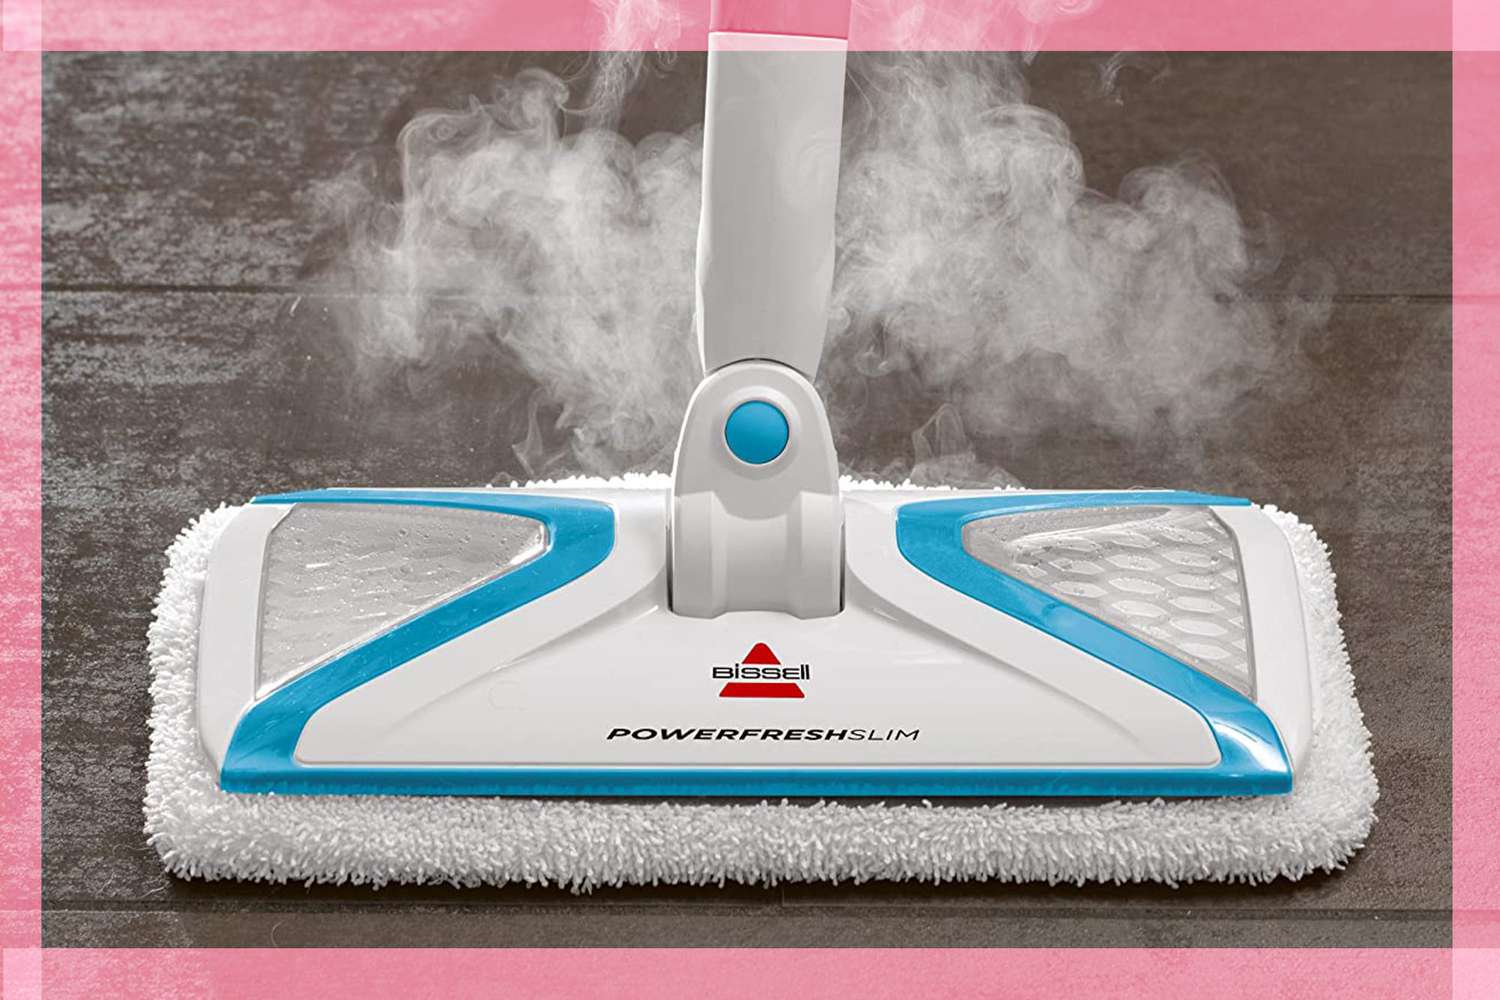 Amazon 쇼핑객은 이 Bissell Steam Mop이 '마법처럼' 청소하며 판매 중이라고 말합니다.